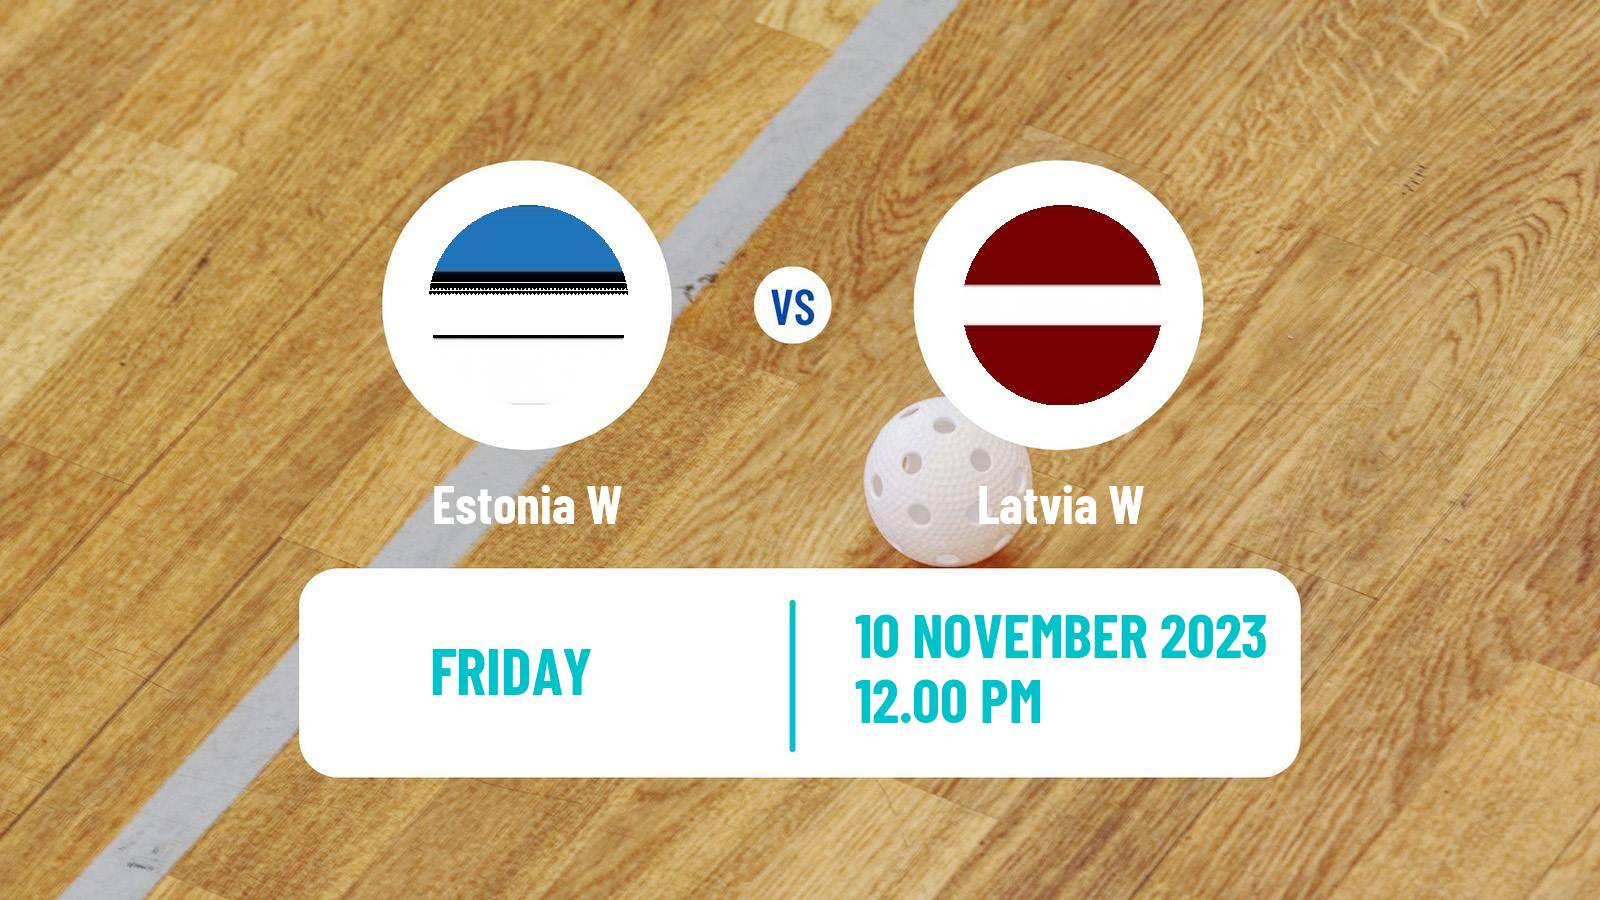 Floorball Friendly International Floorball Women Estonia W - Latvia W